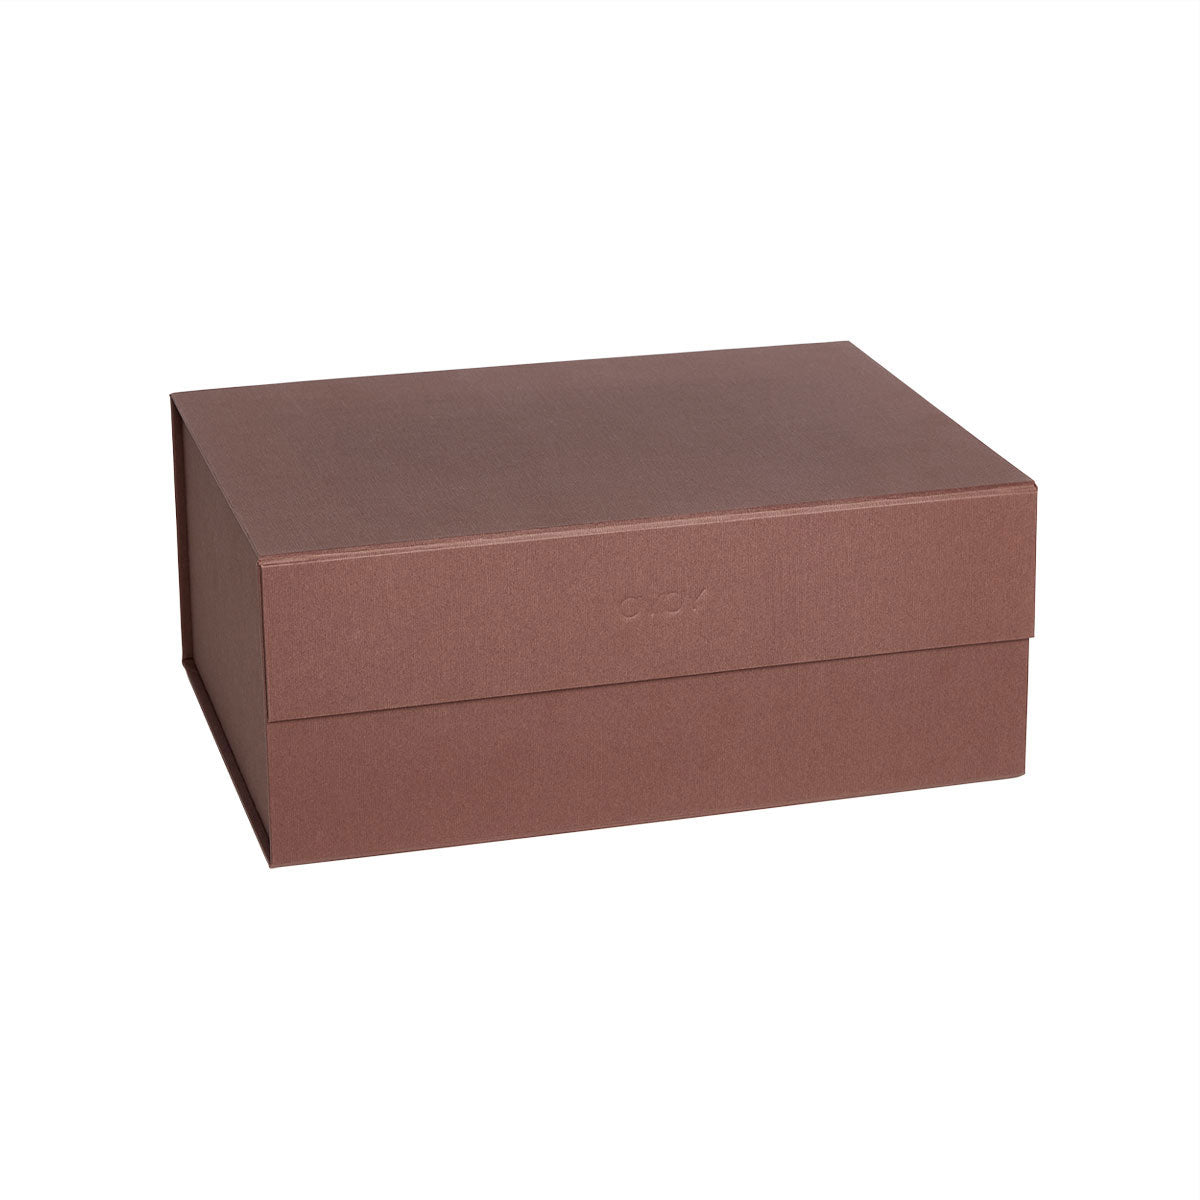 OYOY LIVING Hako Storages Box - A4 Storage 308 Dark Caramel